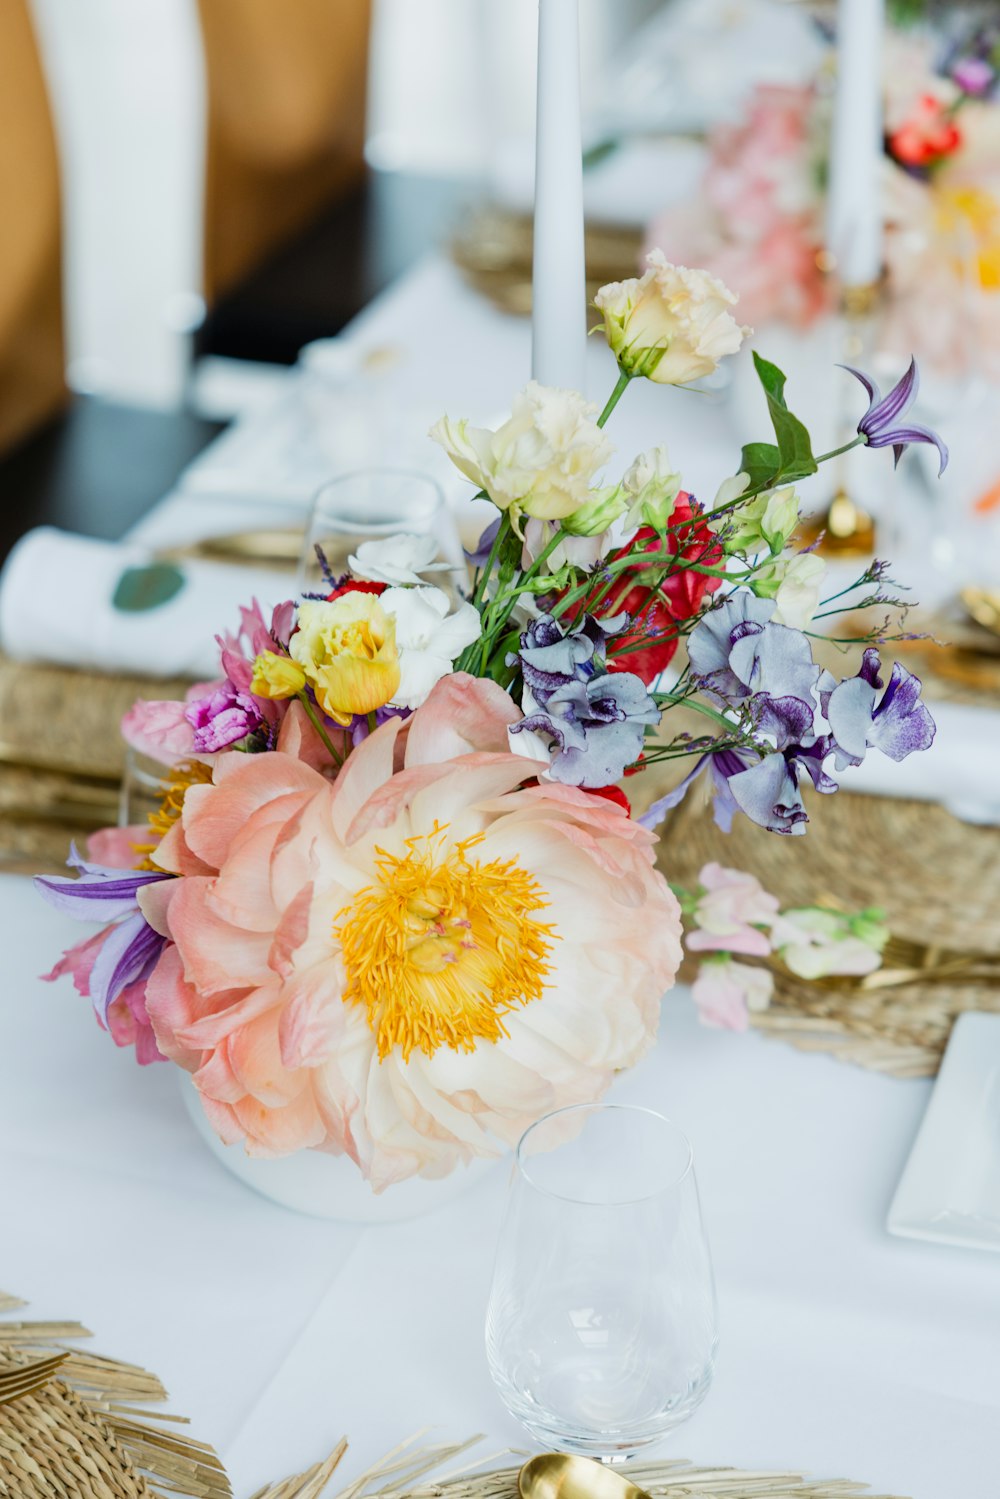 Un ramo de flores sobre una mesa